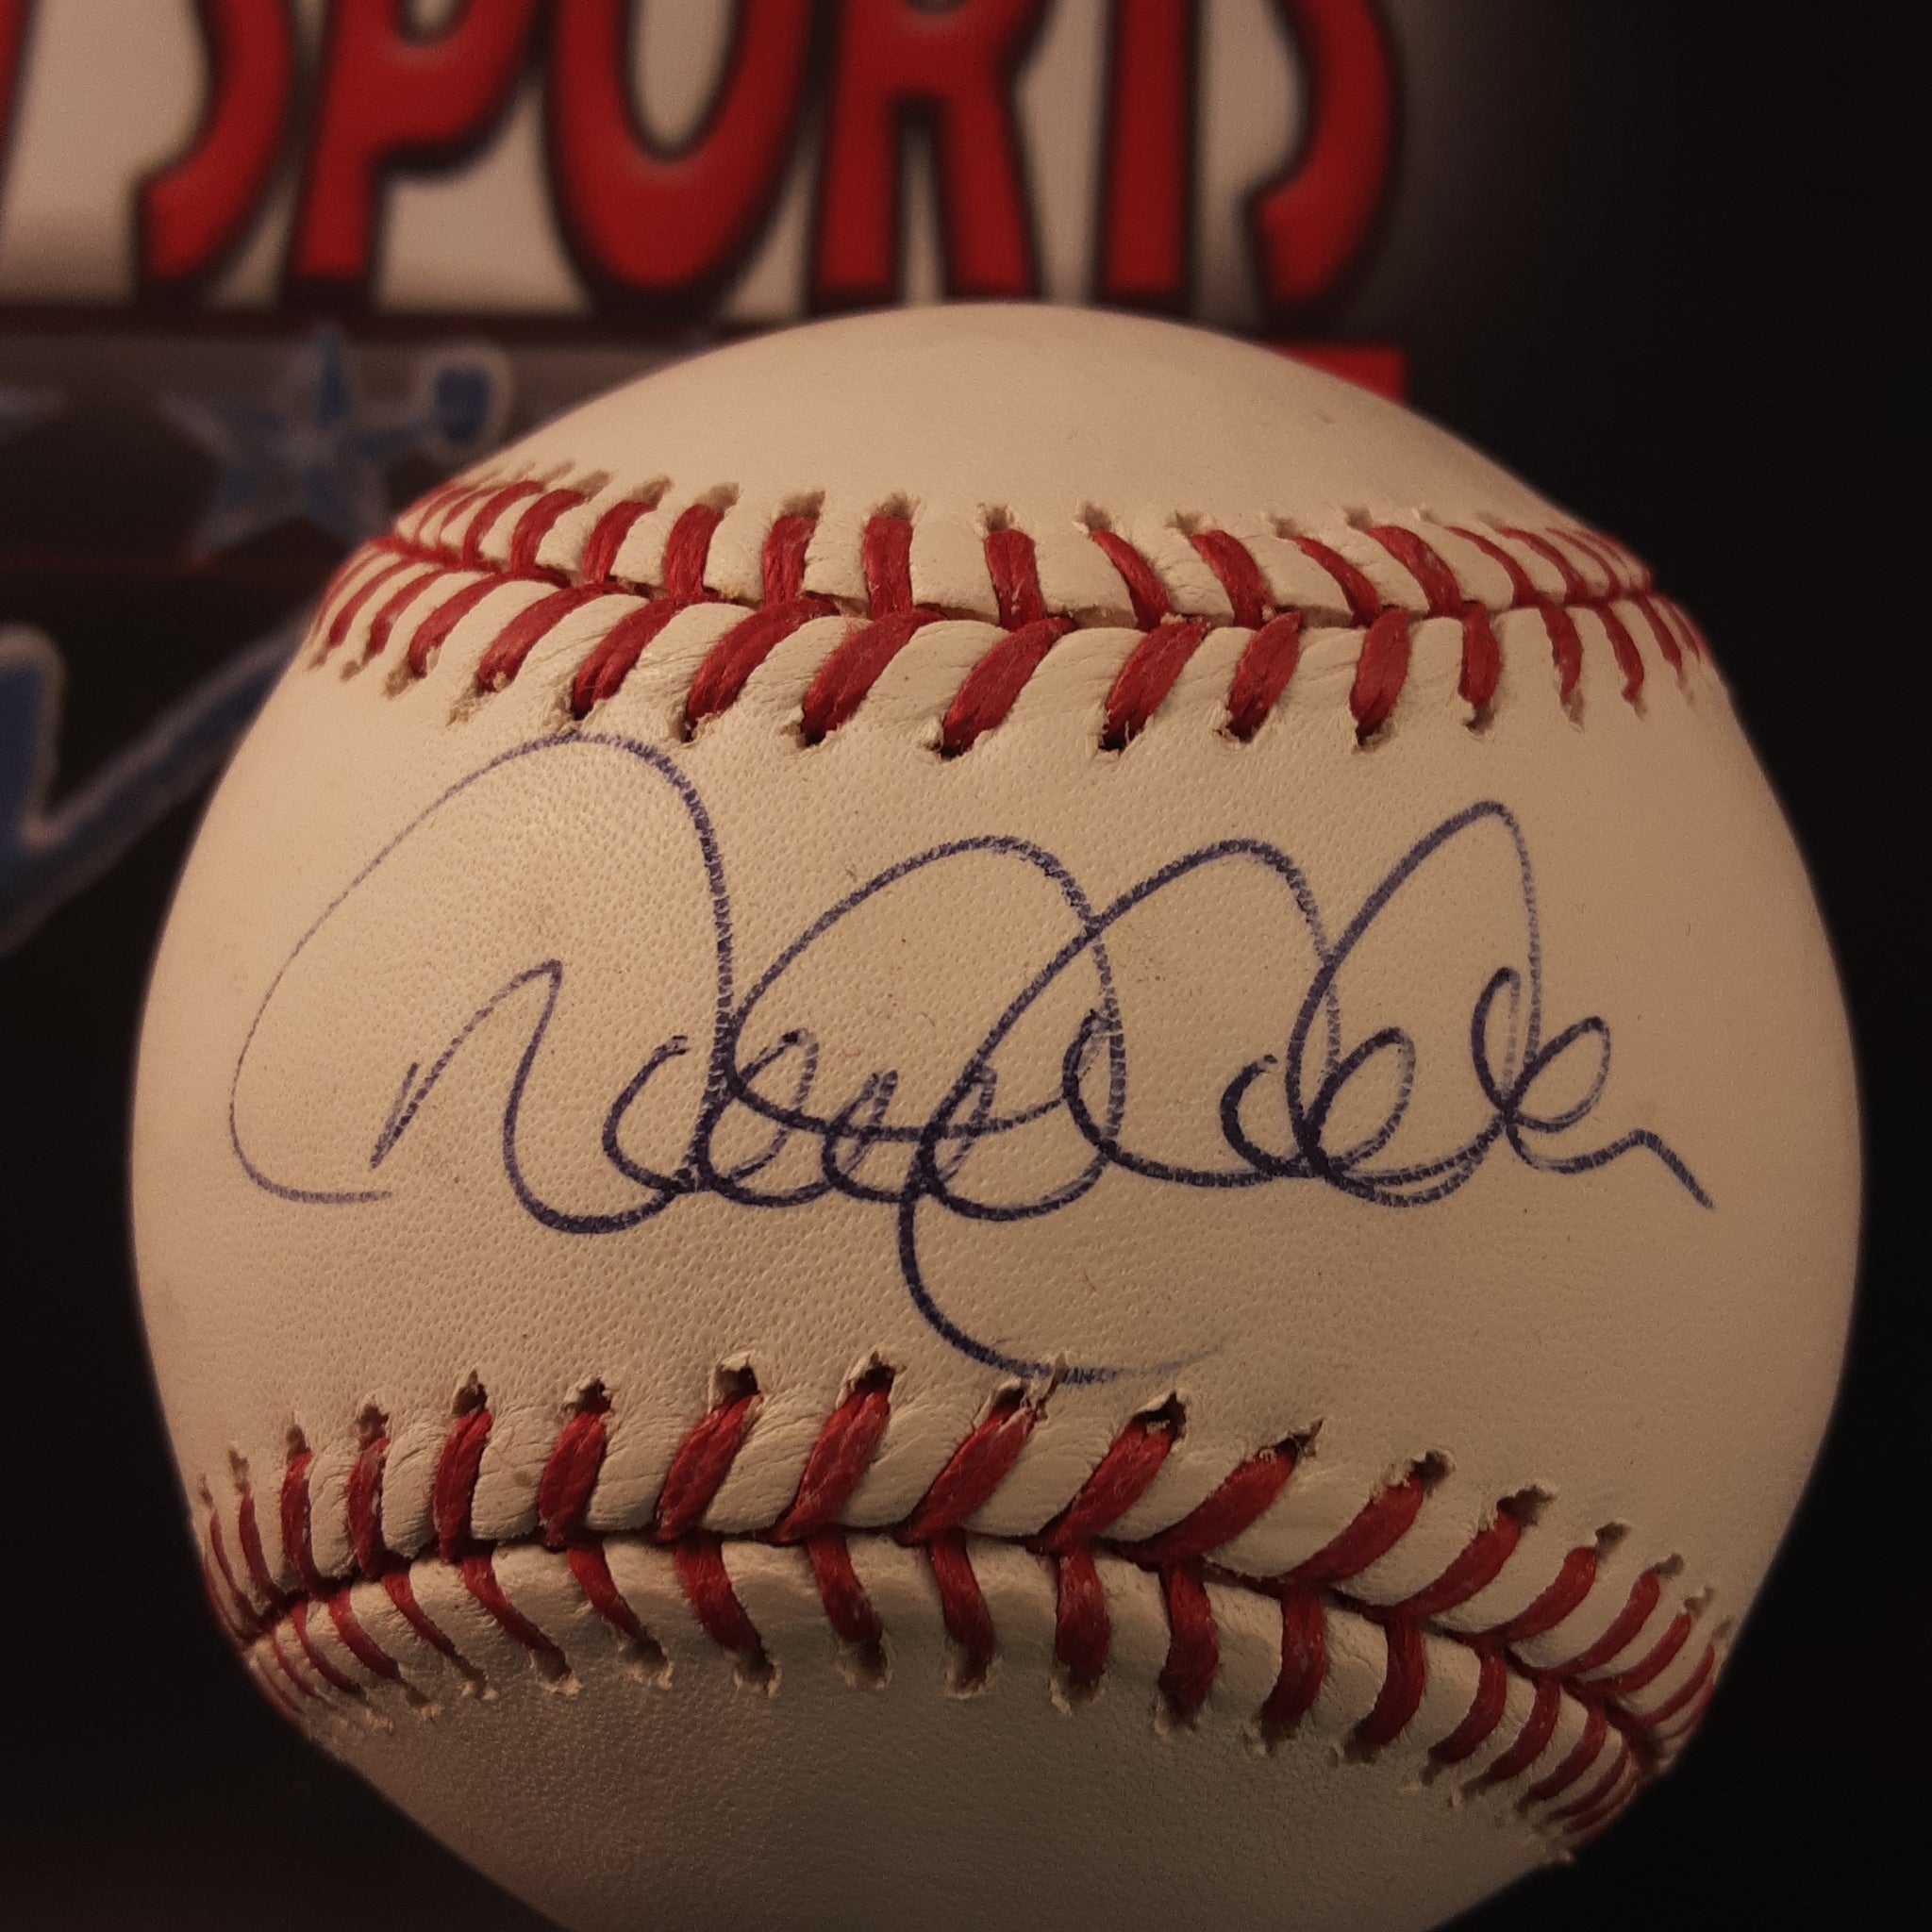 Derek Jeter Authentic Signed Baseball Autographed JSA LOA.